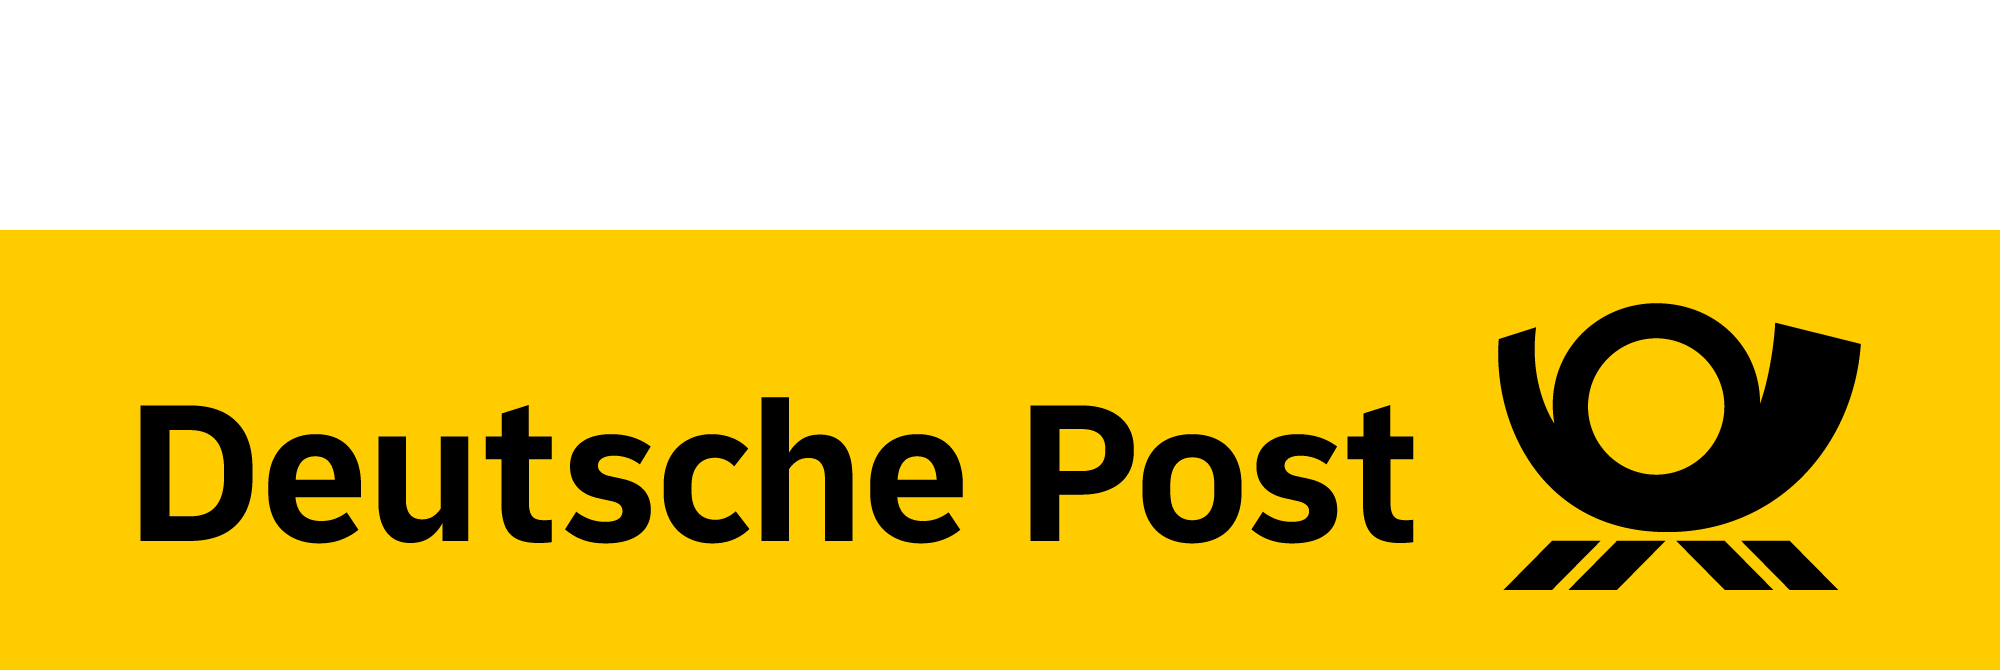 DeutschePost